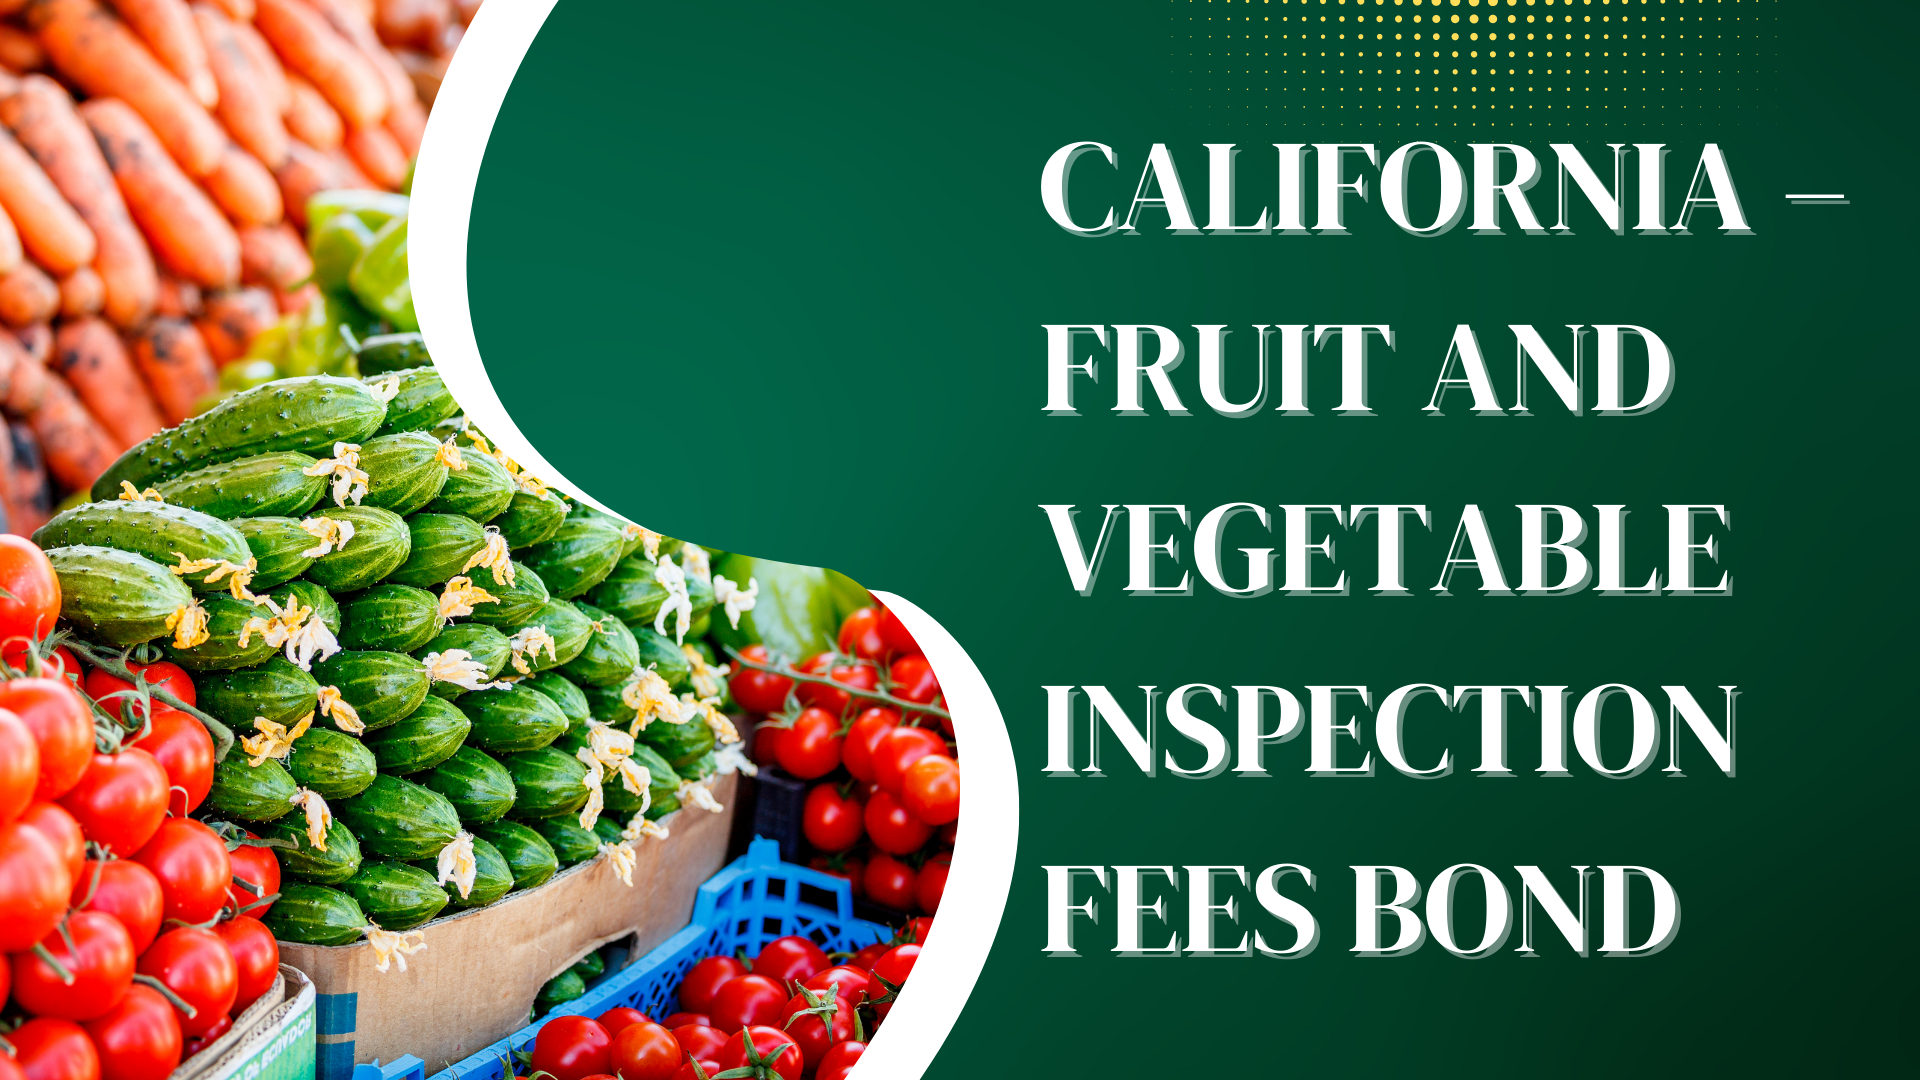 Surety Bond-California – Fruit and Vegetable Inspection Fees Bond